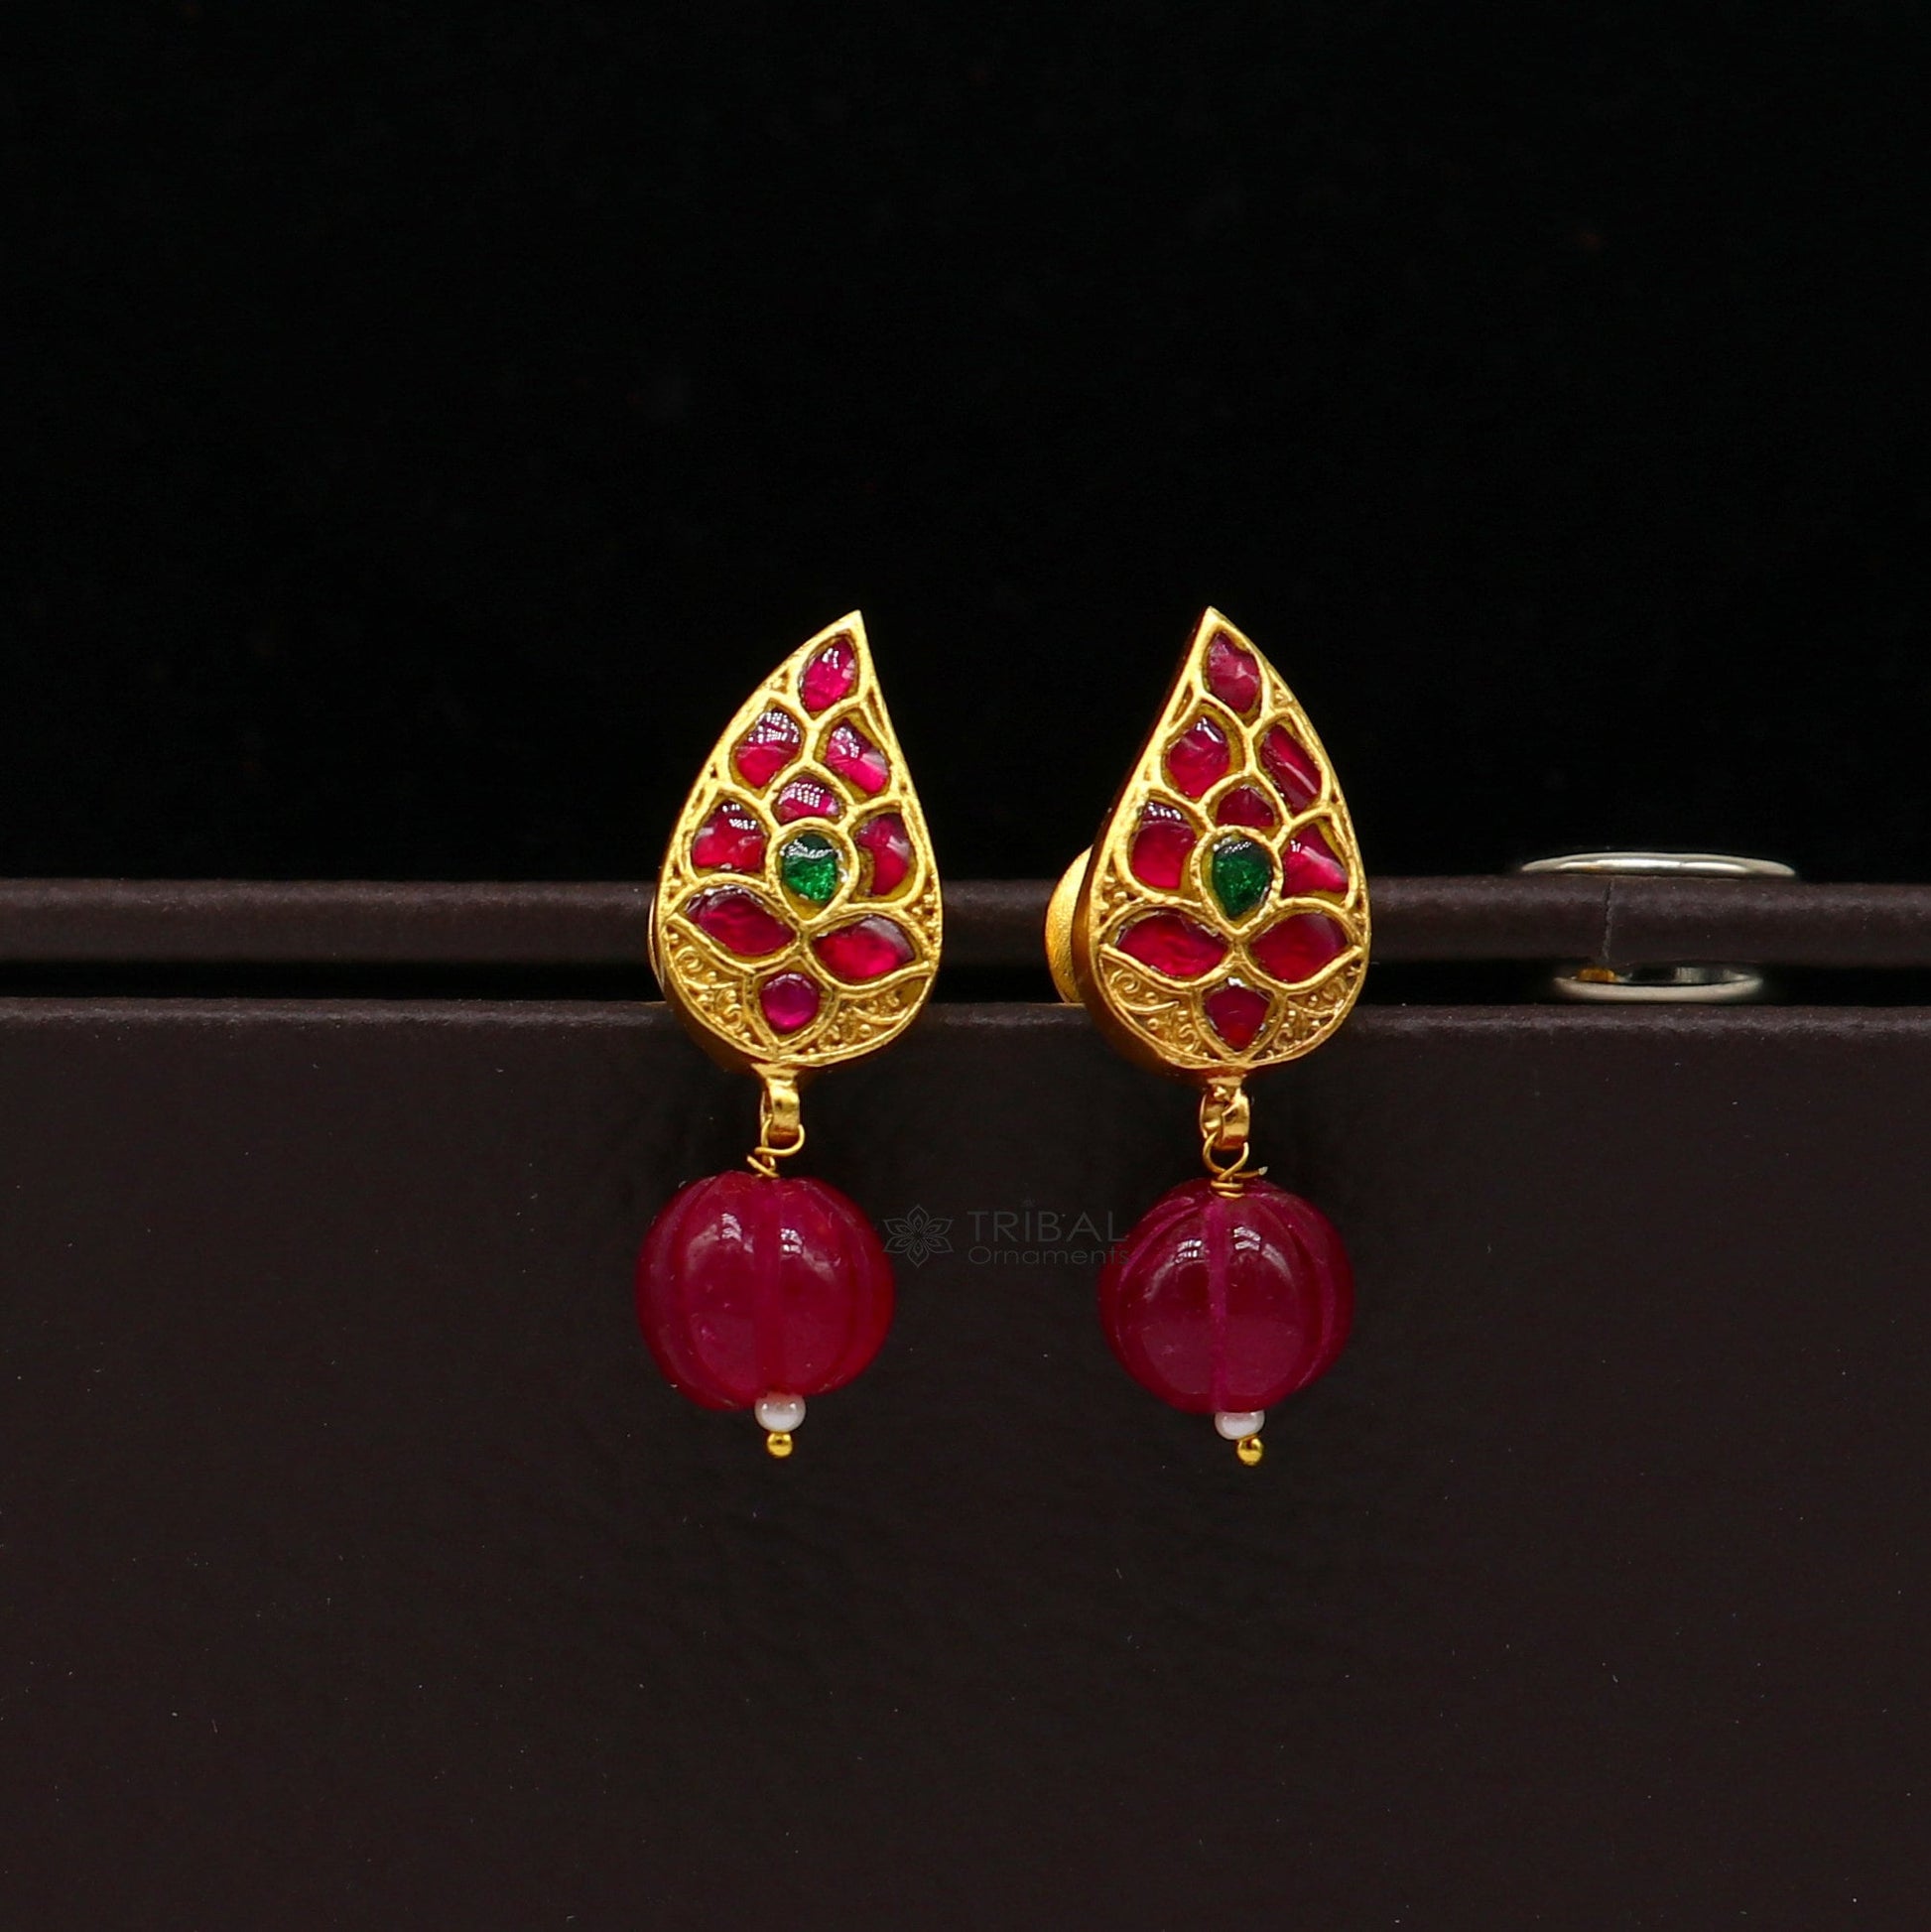 925 sterling silver gold polished handmade kundan work green and red stone fabulous flower shape stud earrings Modern trendy  jewelry s1179 - TRIBAL ORNAMENTS